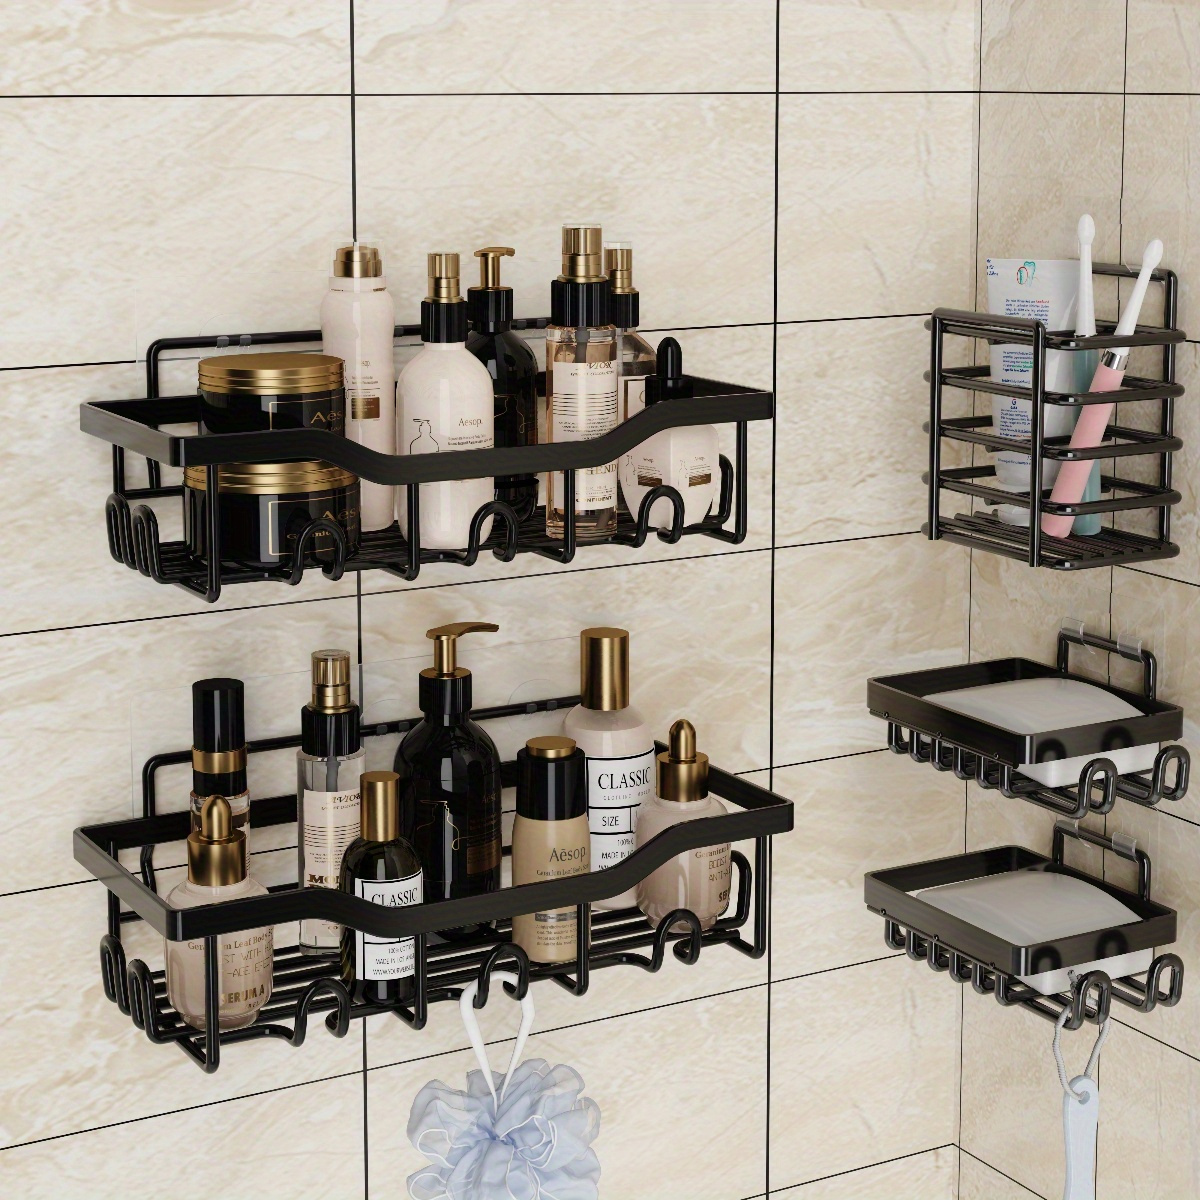 Shower Caddy - 5-Pack Shower Shelves, Adhesive Shower Organizer